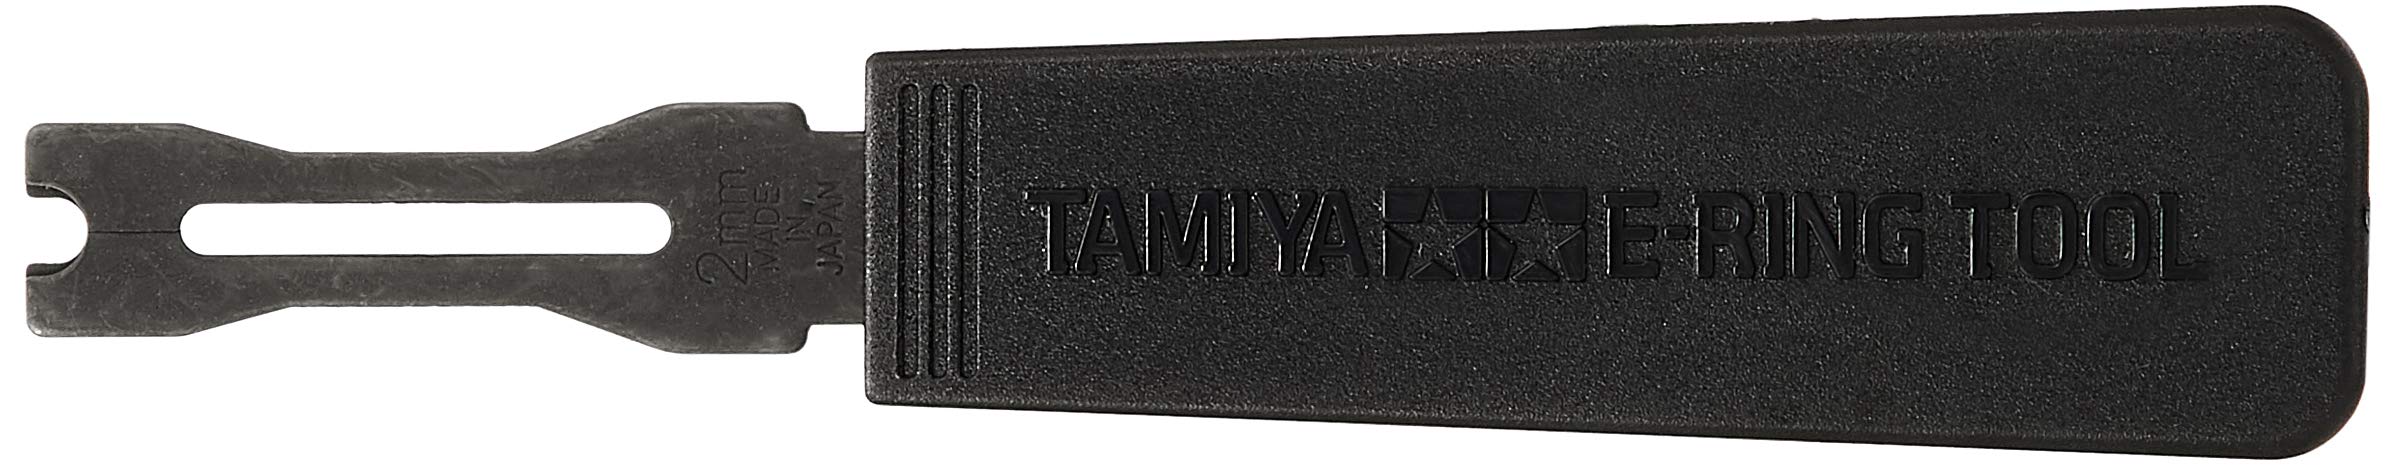 TAMIYA 74032 Craft Tools E-Ring Tool 2Mm